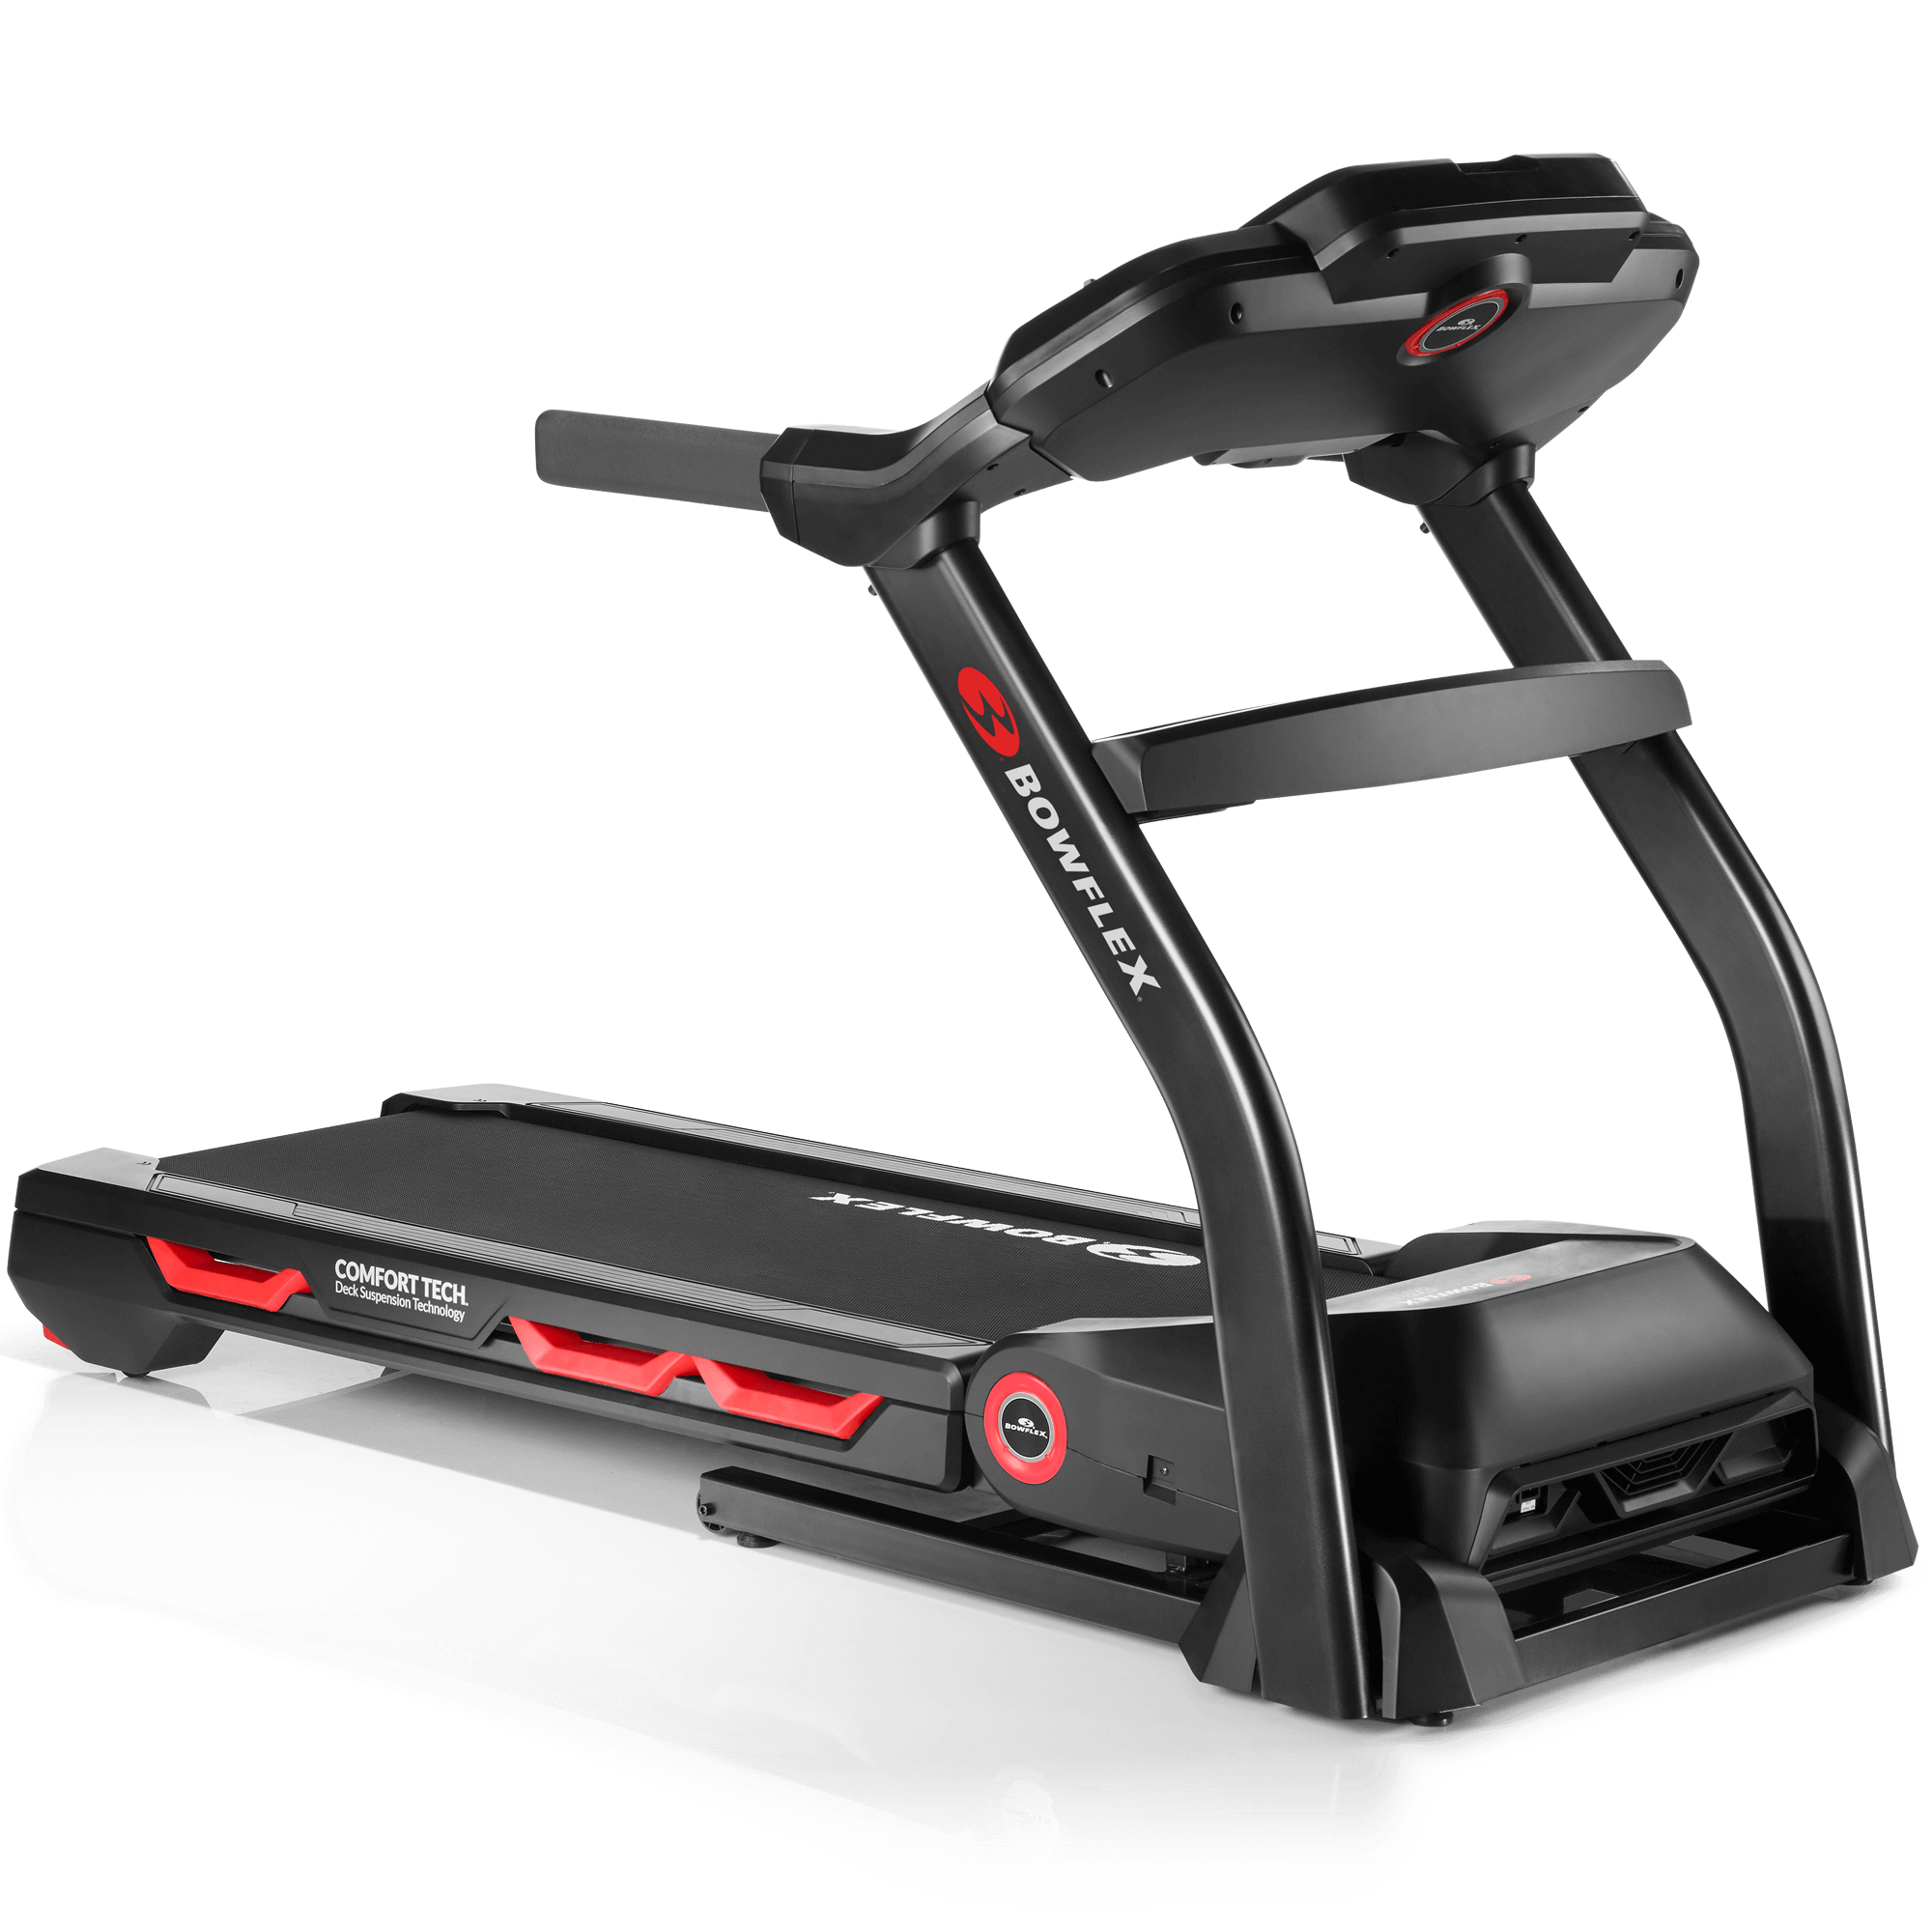 Bowflex Treadmill 7 Series Manual